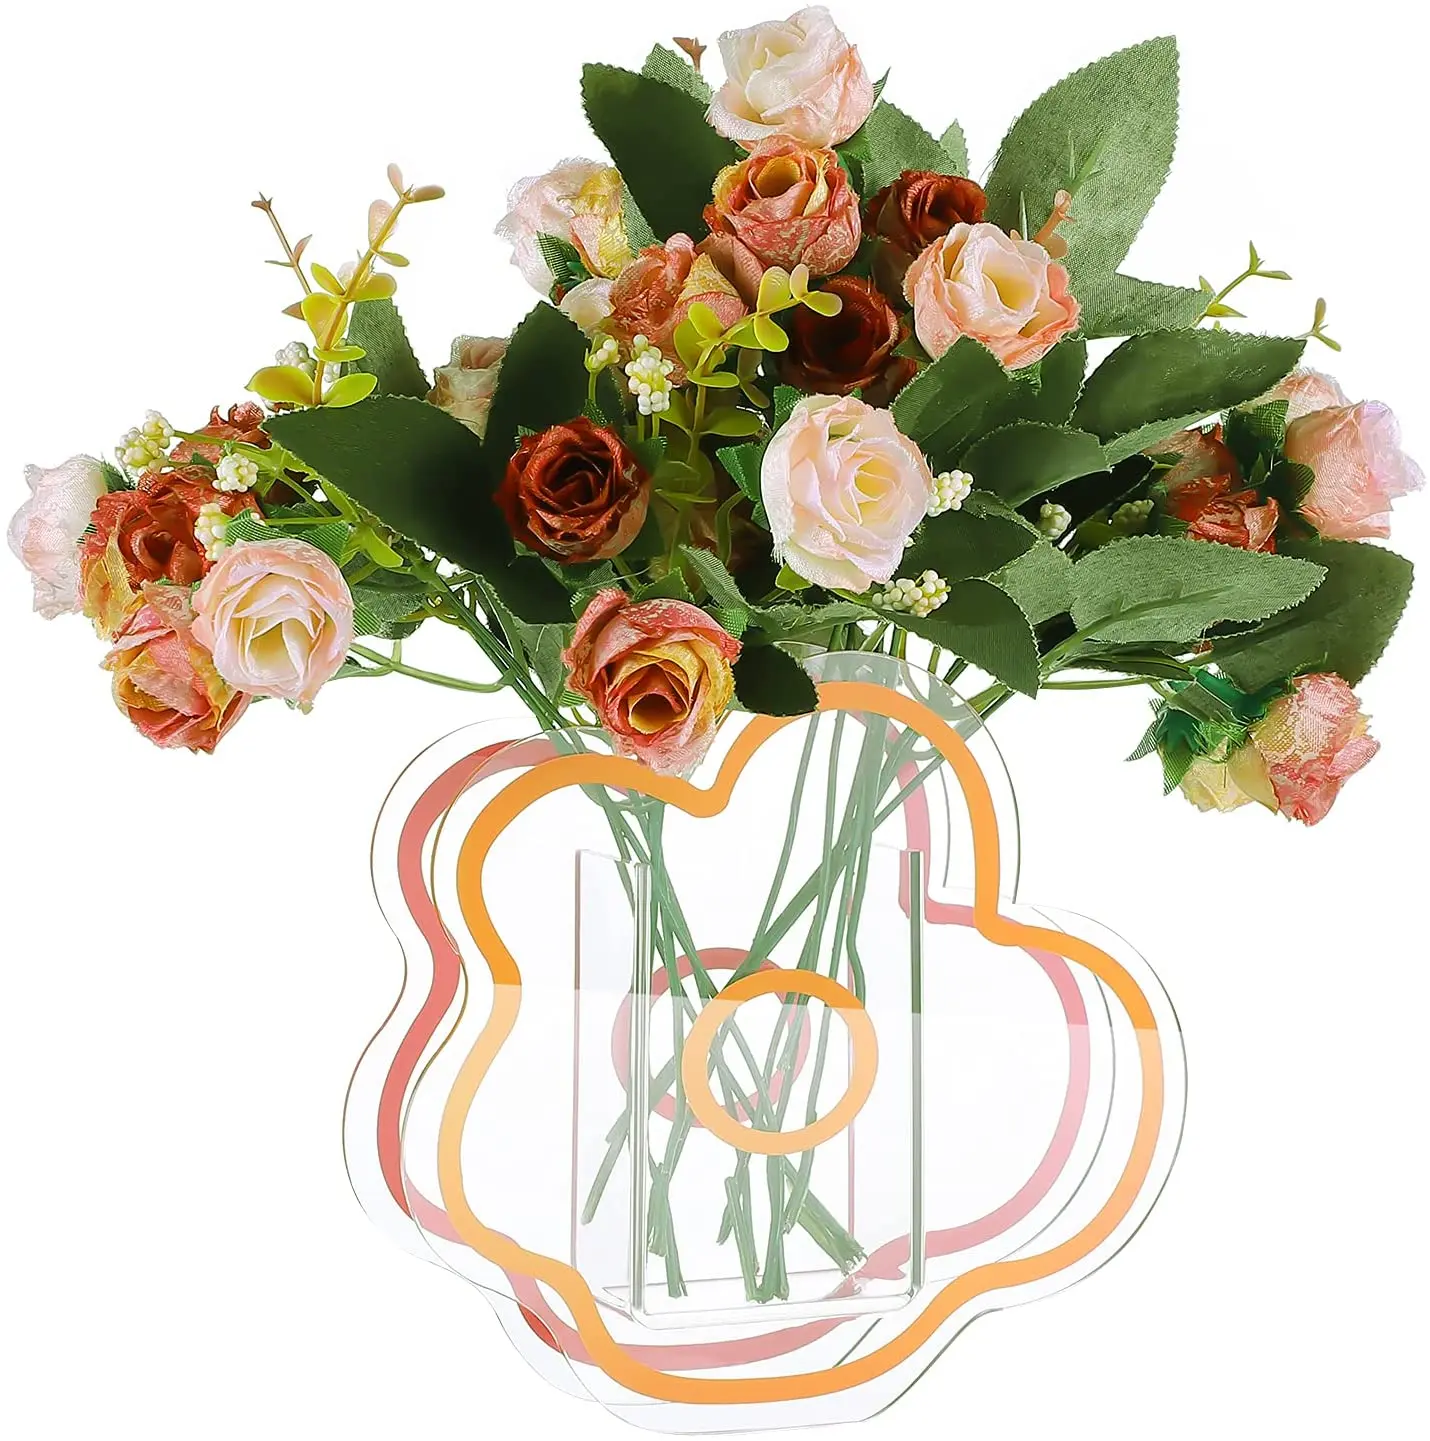 

Wedding decoration & supplies glass vase crystal flower vases for weddings centerpiece wholesales